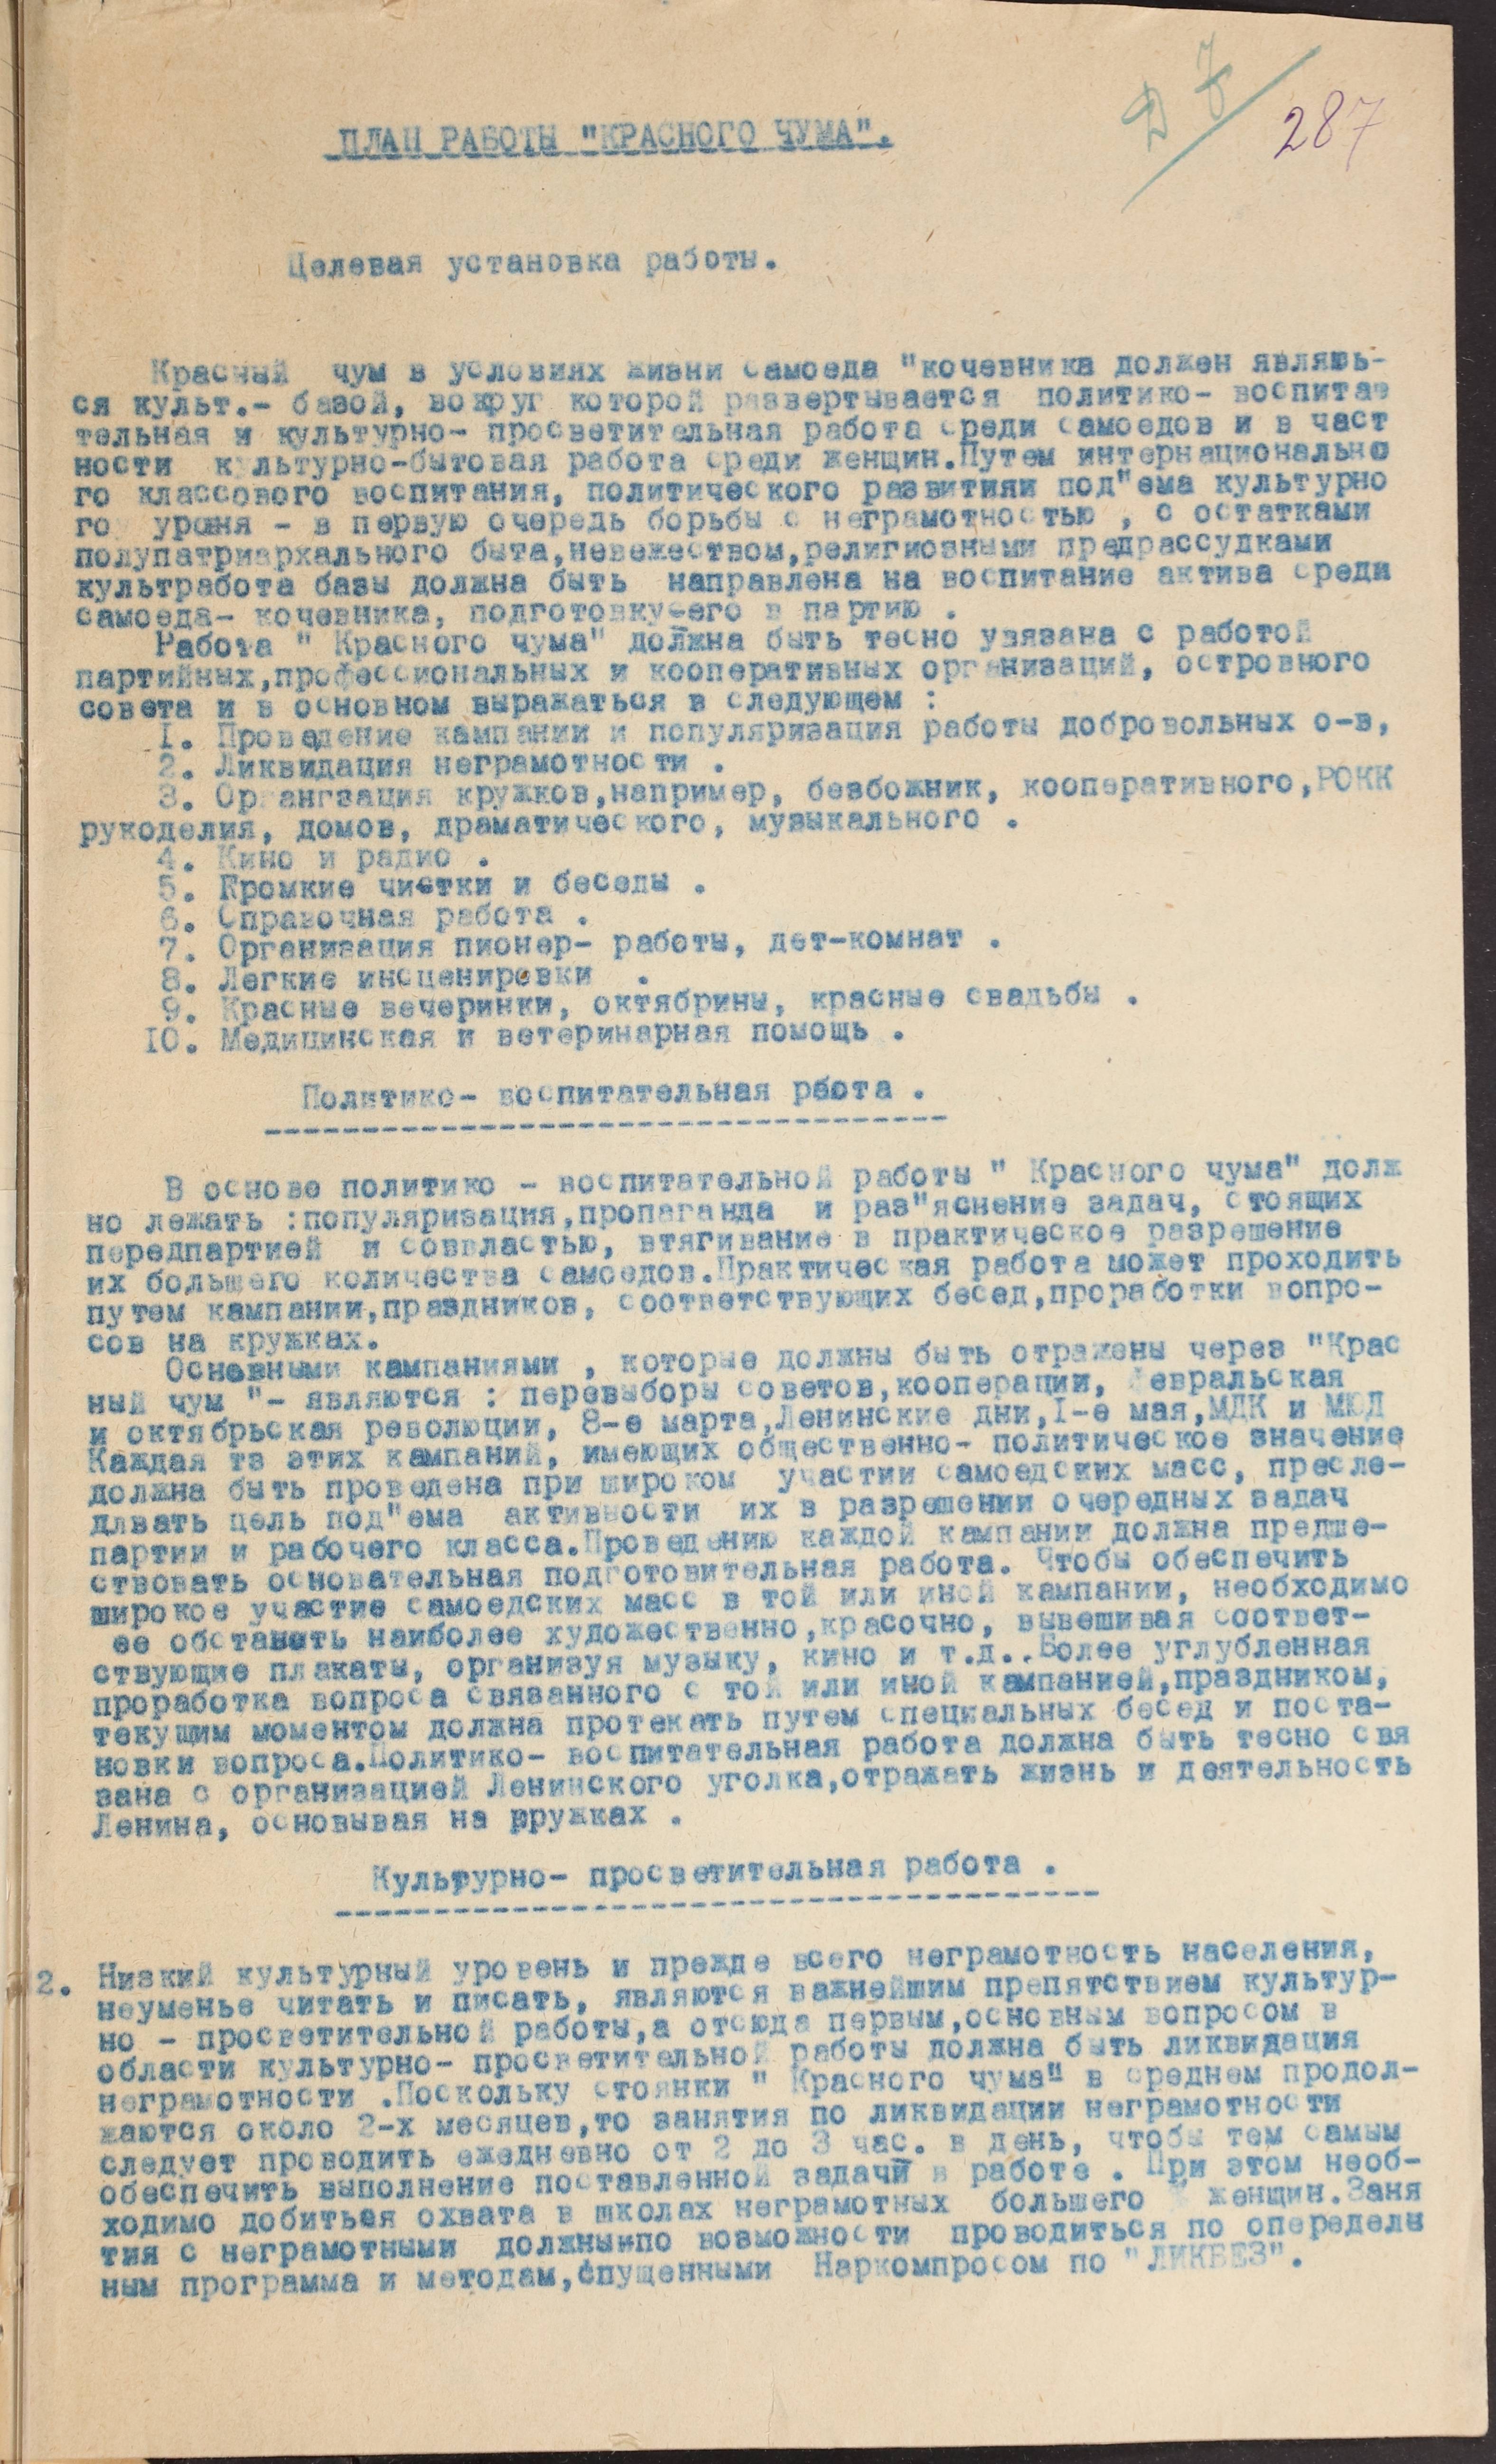 План работы "Красного чума". 1929 г. ГААО. Ф. Р-760. Оп. 1. Д. 63. Л. 287.